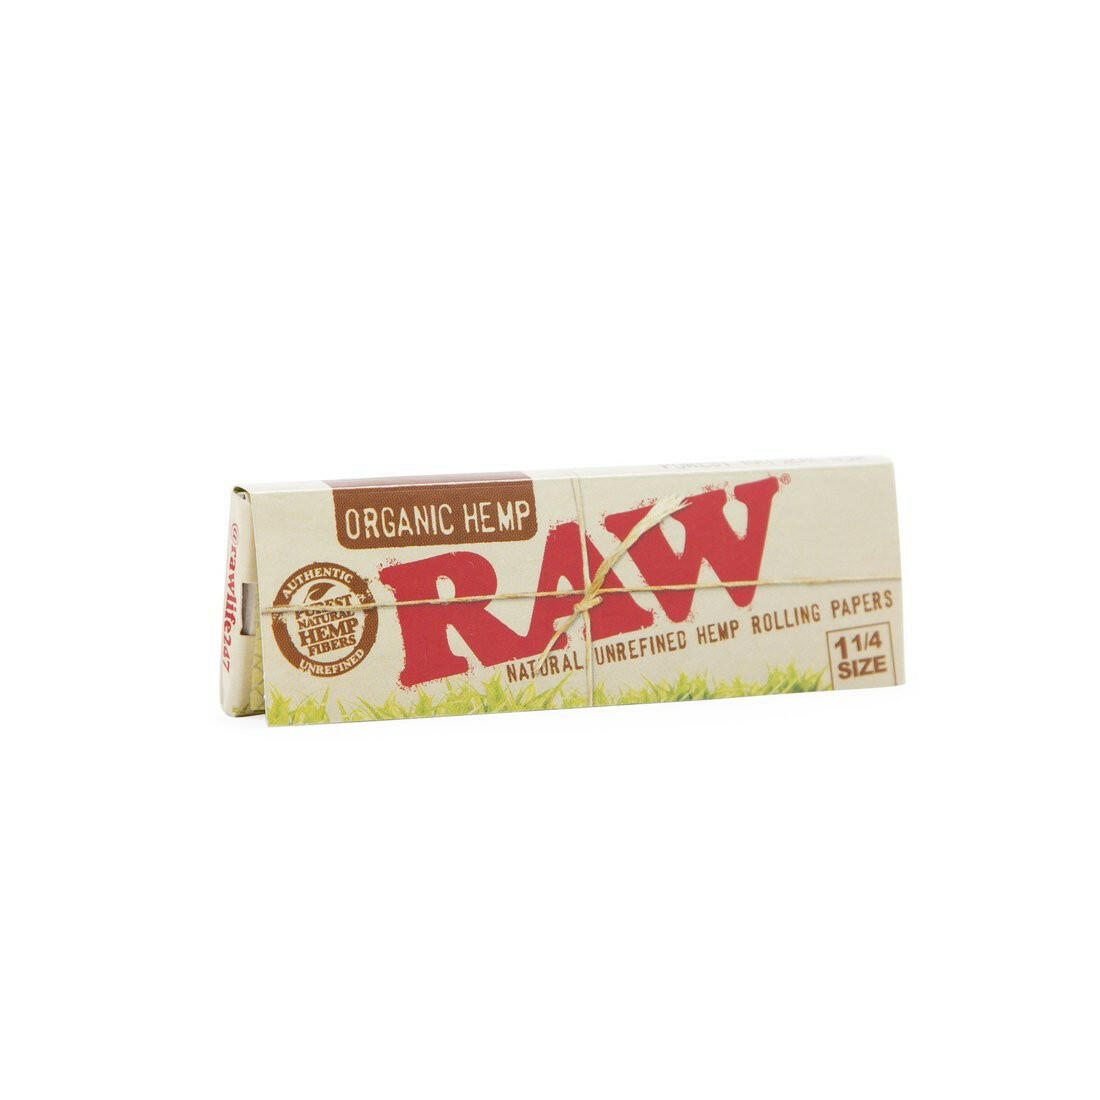 RAW Organic Hemp 1 1/4in Rolling Papers